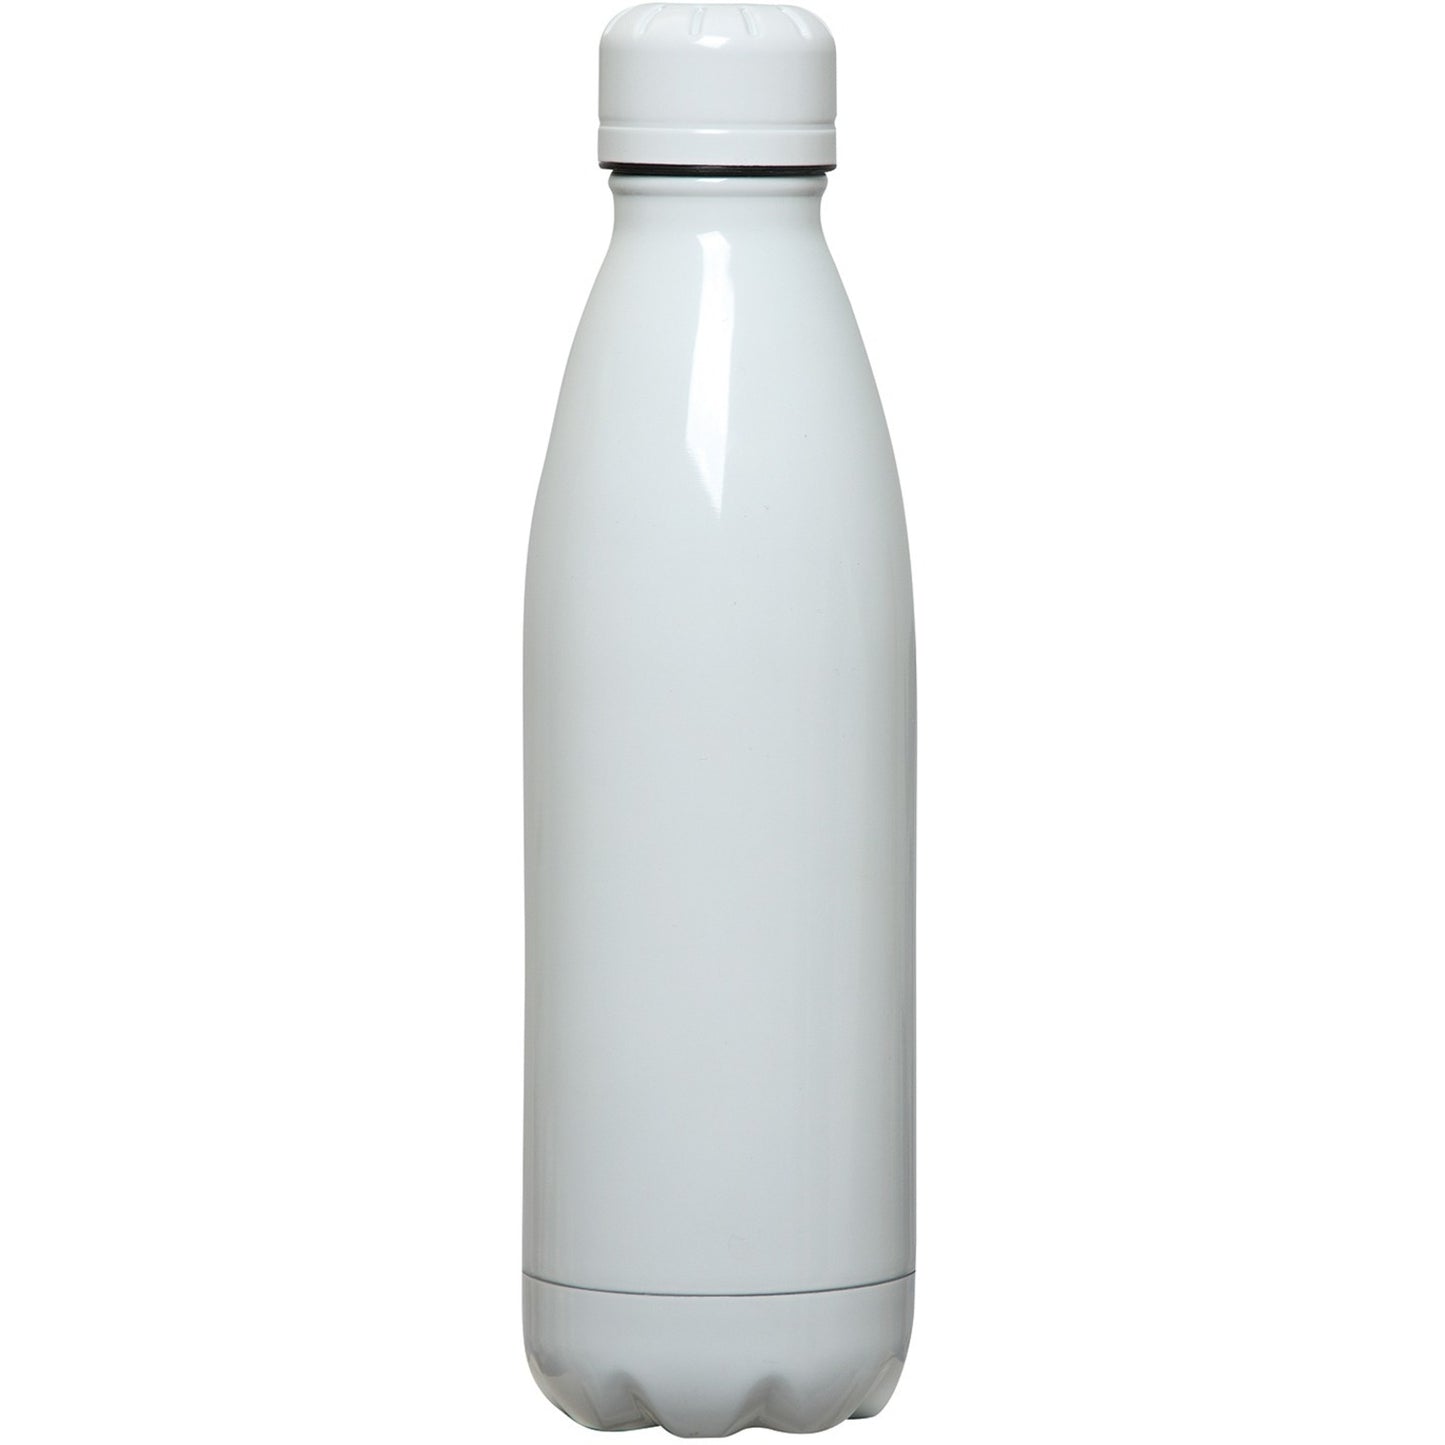 DURA Insulated Water Bottle